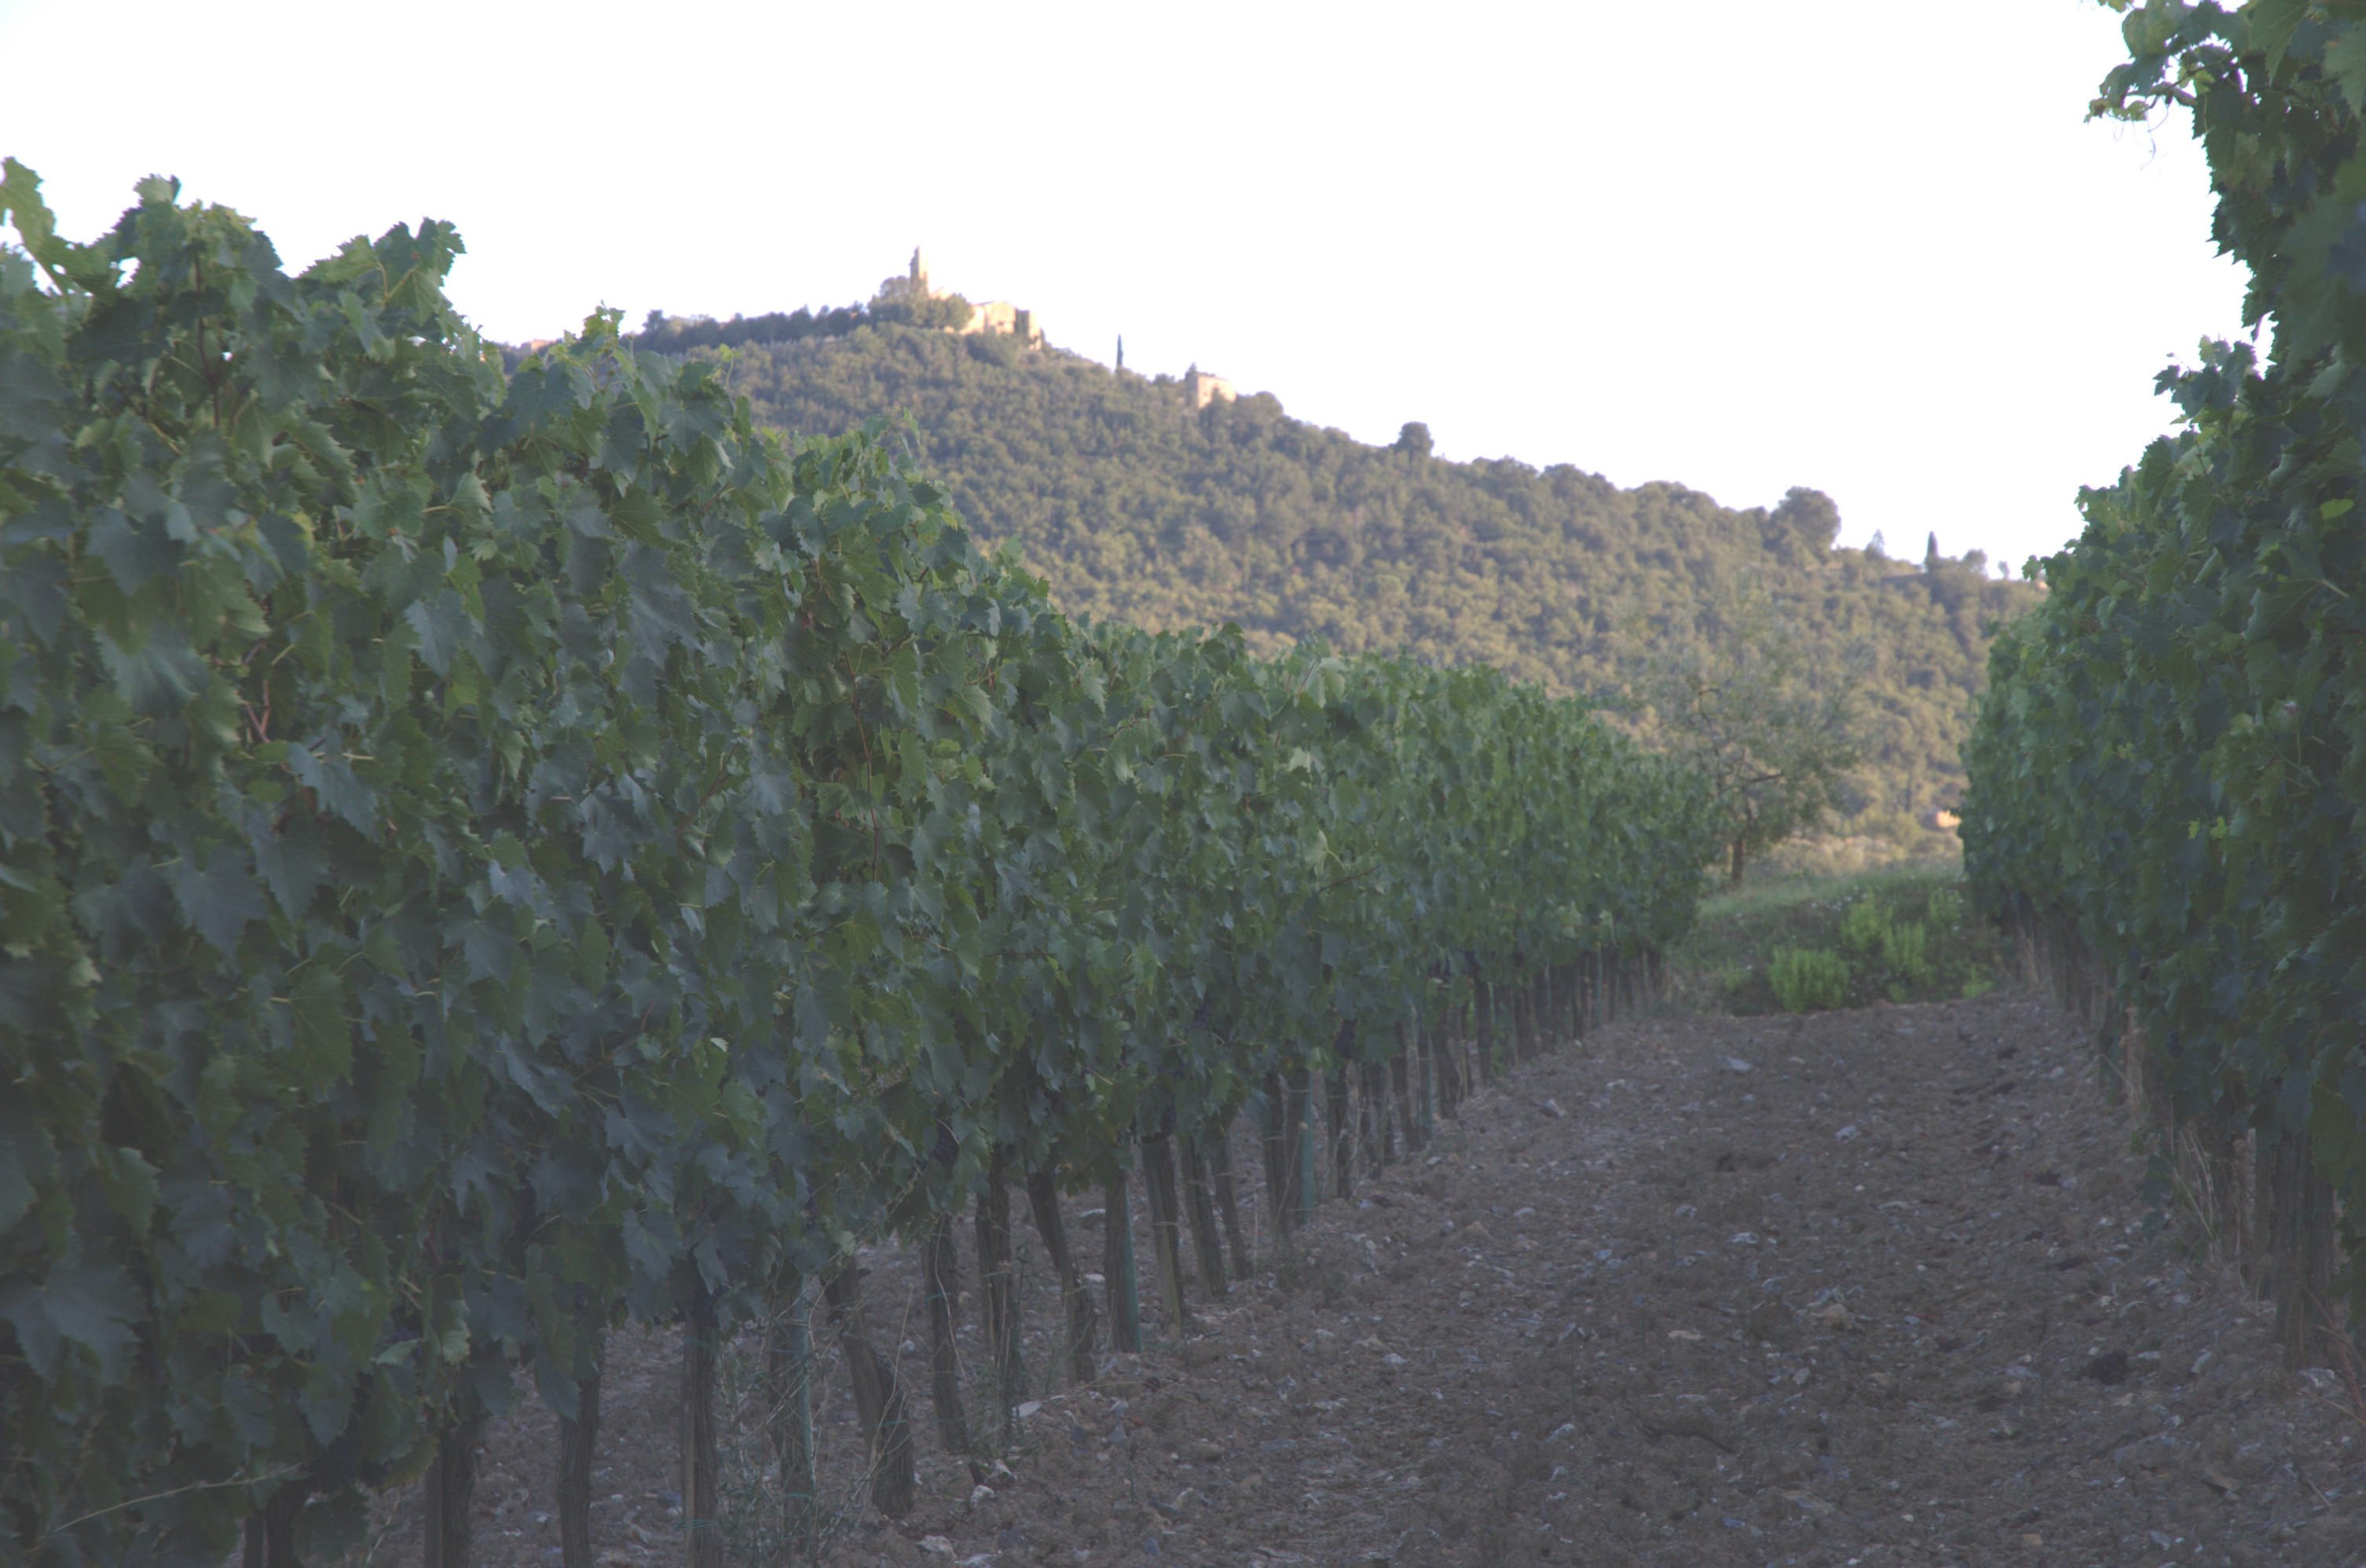 Baricci's Montosoli vineyard